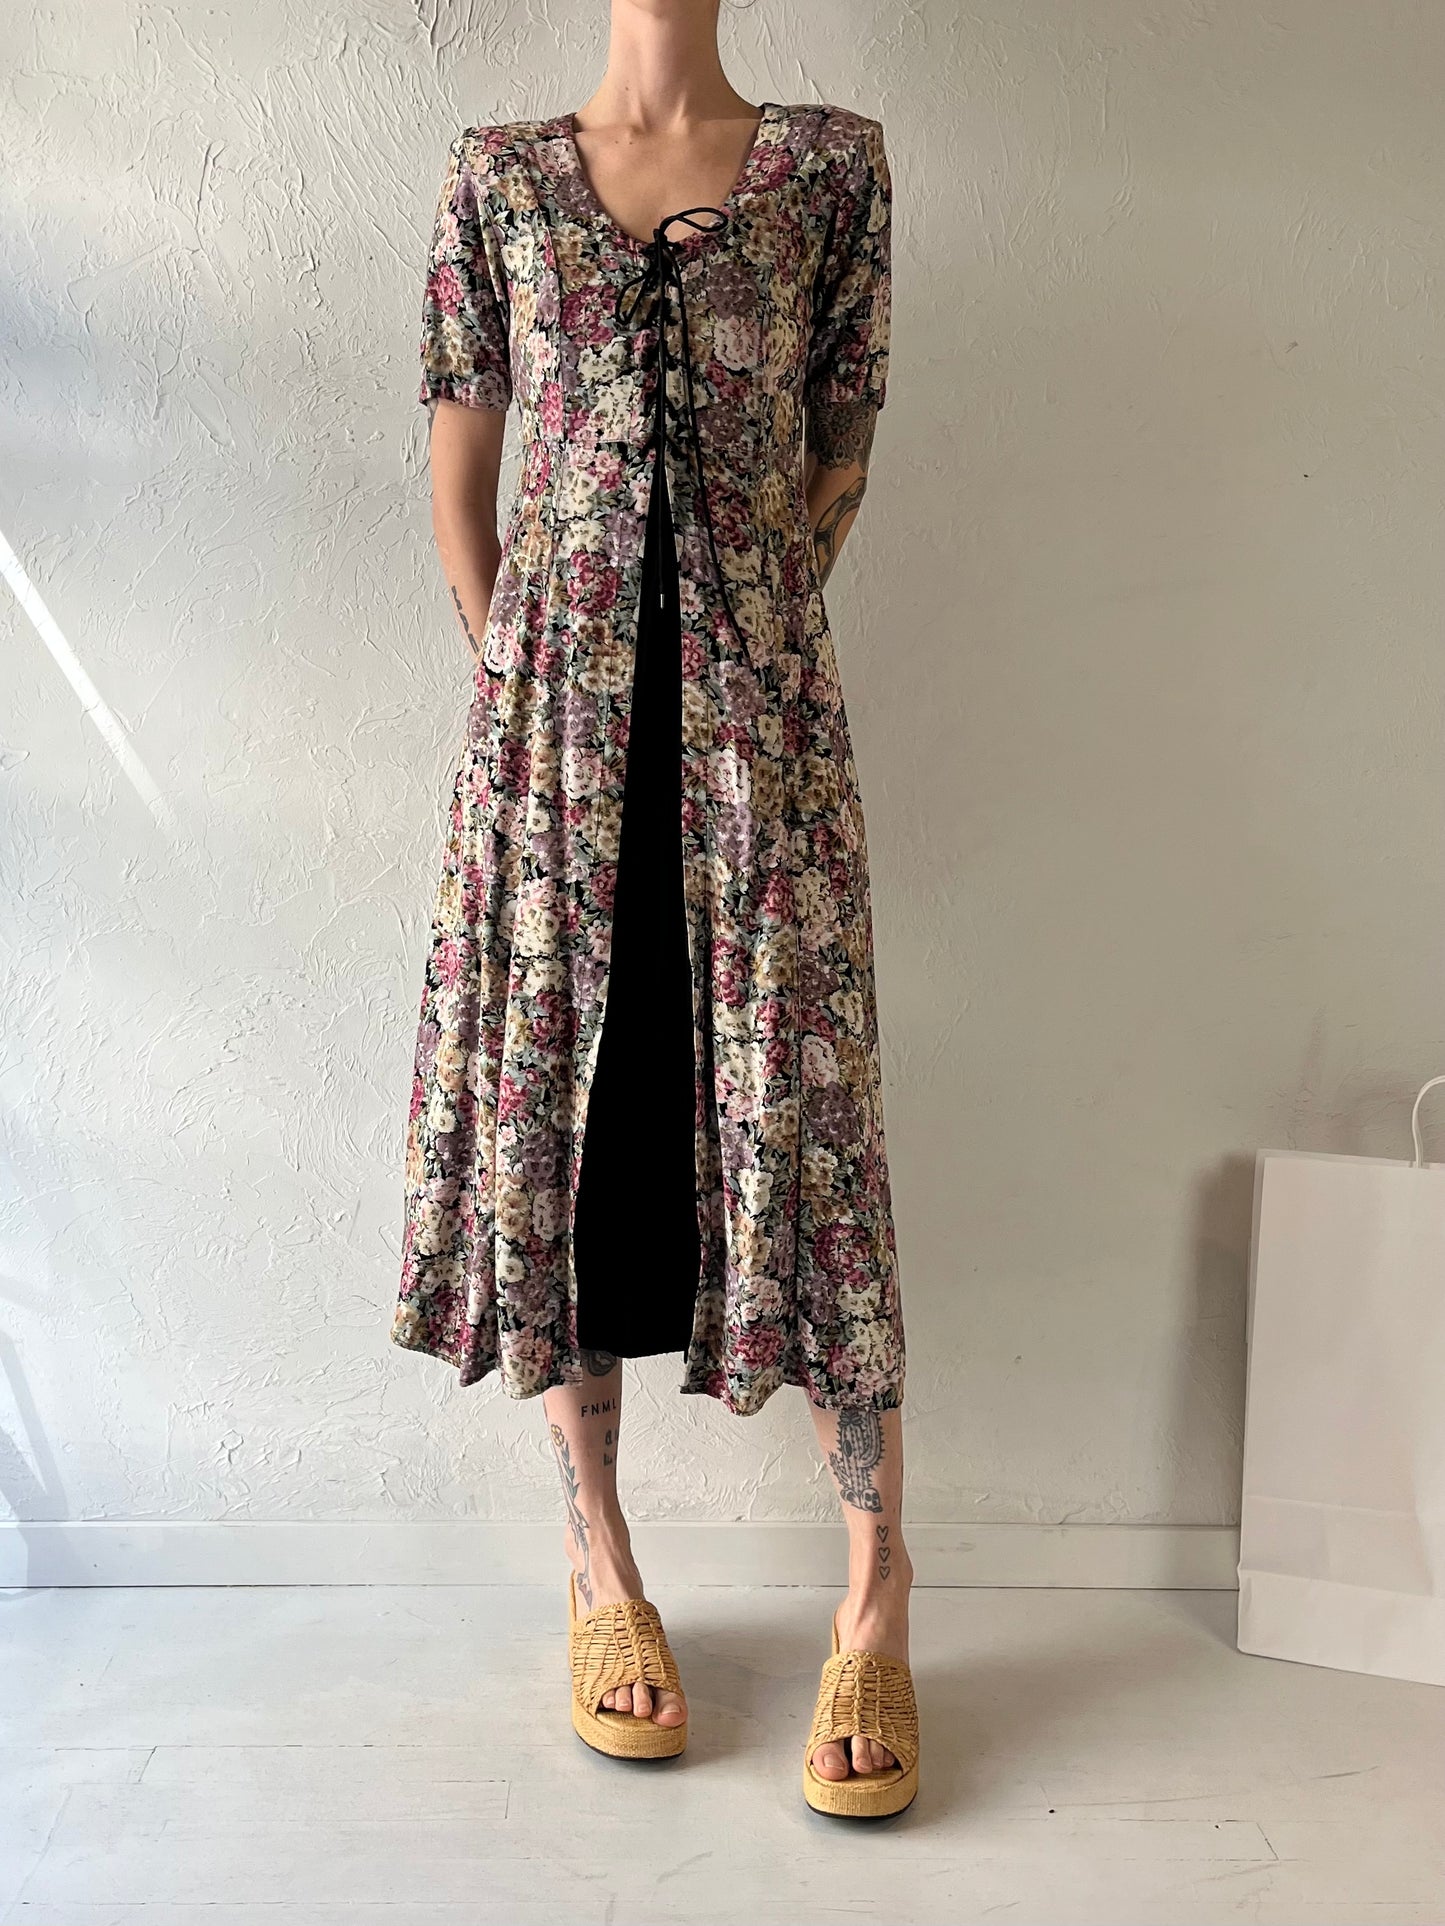 90s 'Nostalgia' Floral Print Rayon Dress / Medium